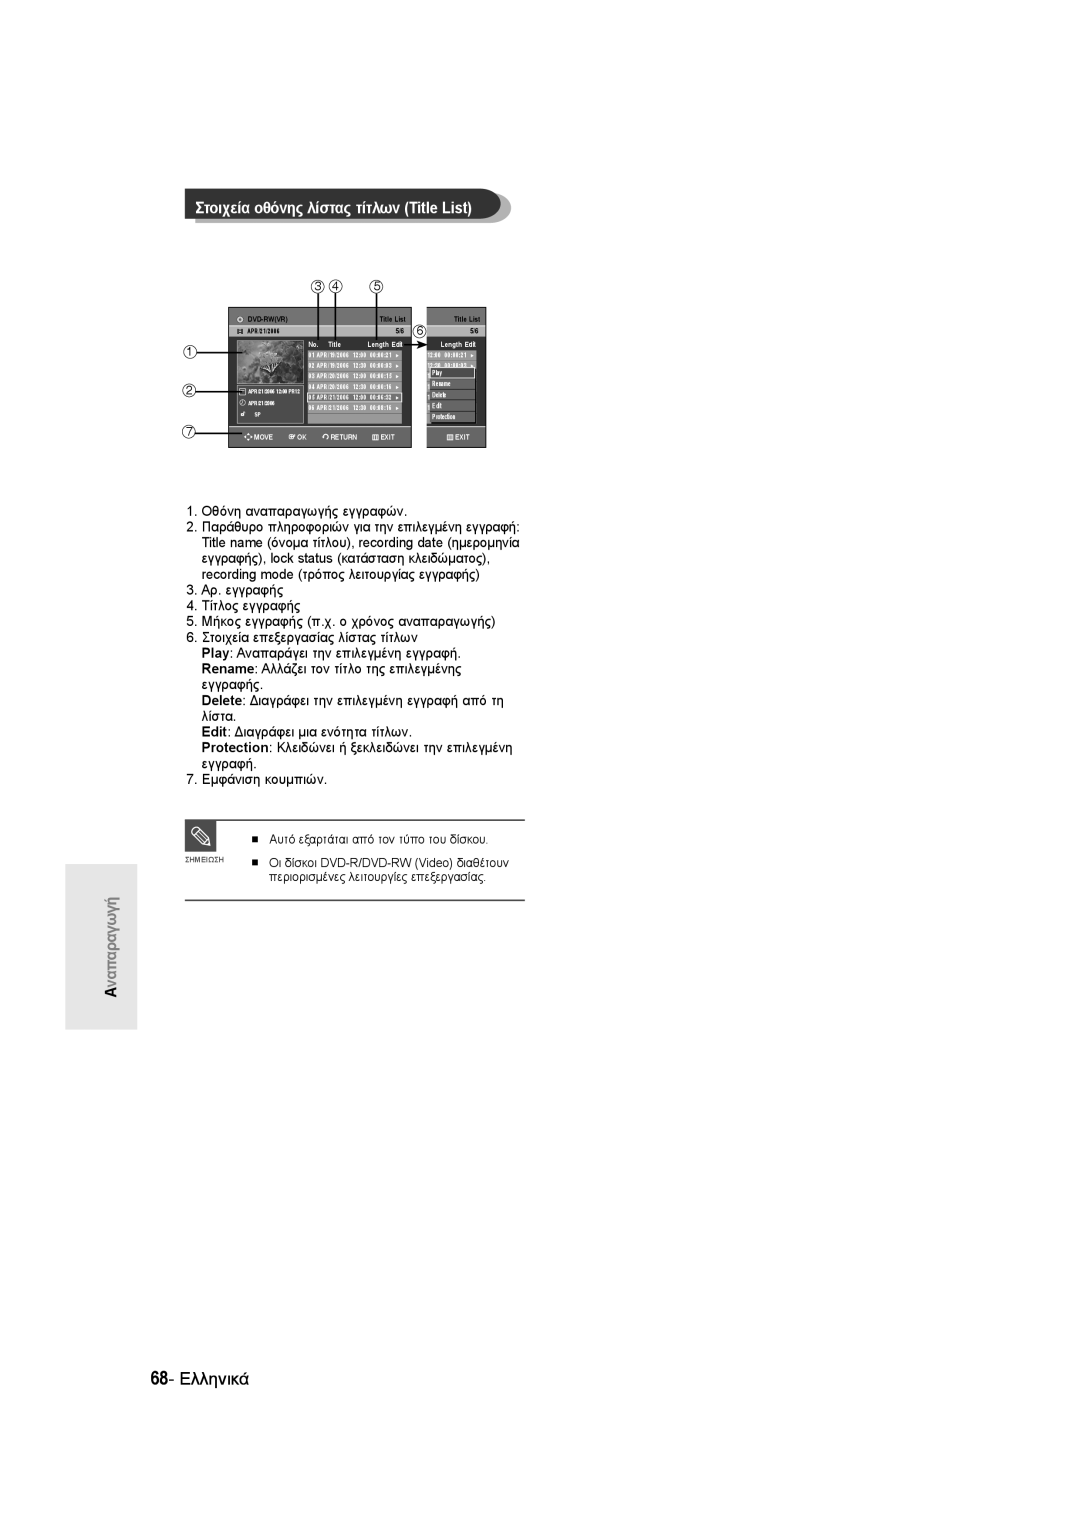 Samsung DVD-R135/XEB, DVD-R135/EUR manual 68- Ελληνικά, Οθόνη αναπαραγωγής εγγραφών, Αυτό εξαρτάται από τον τύπο του δίσκου 